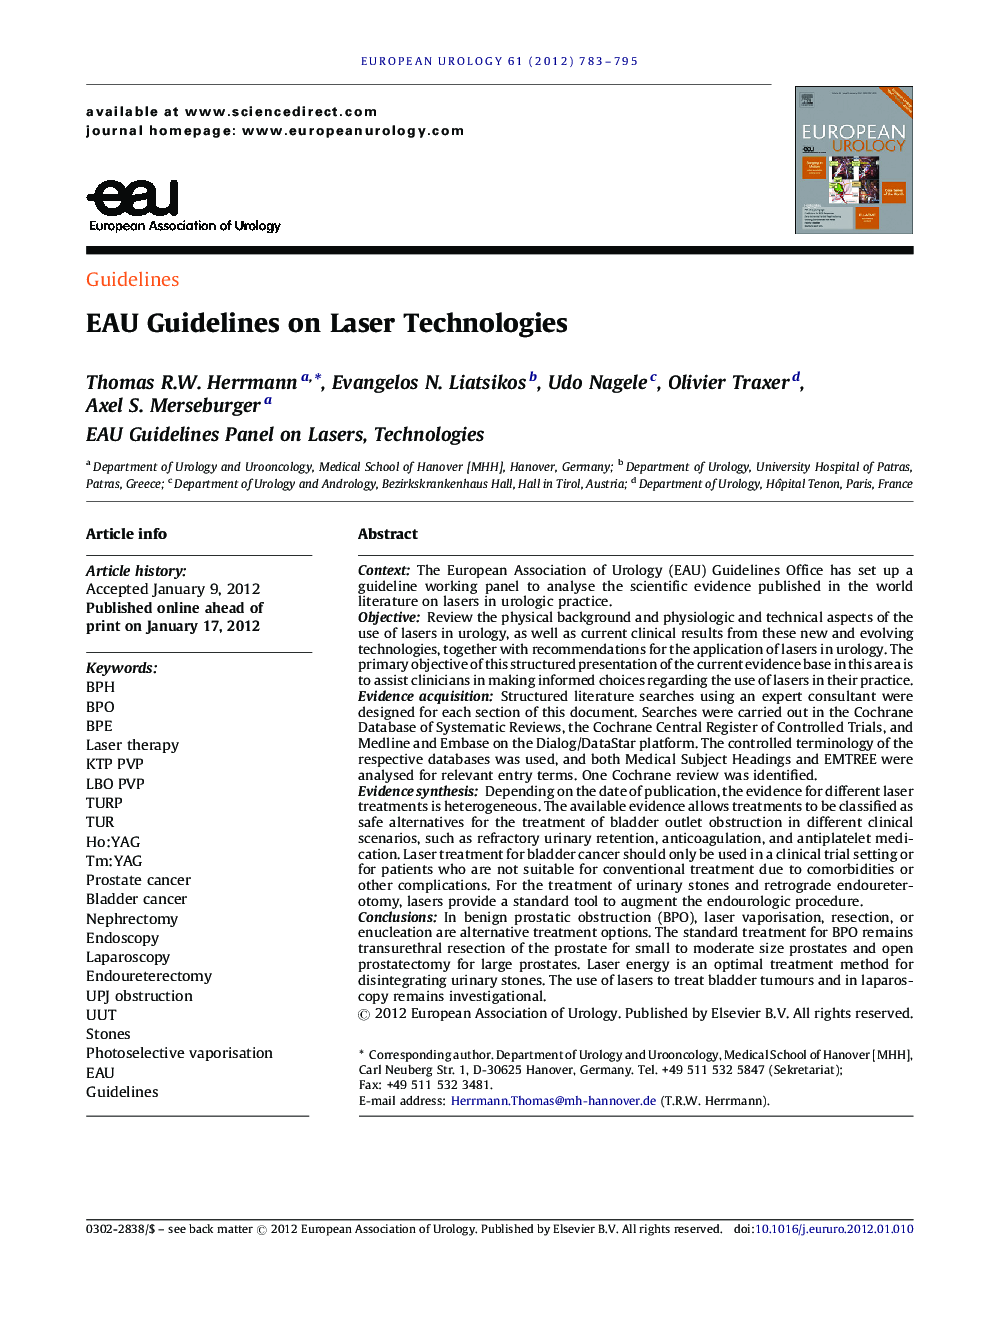 EAU Guidelines on Laser Technologies